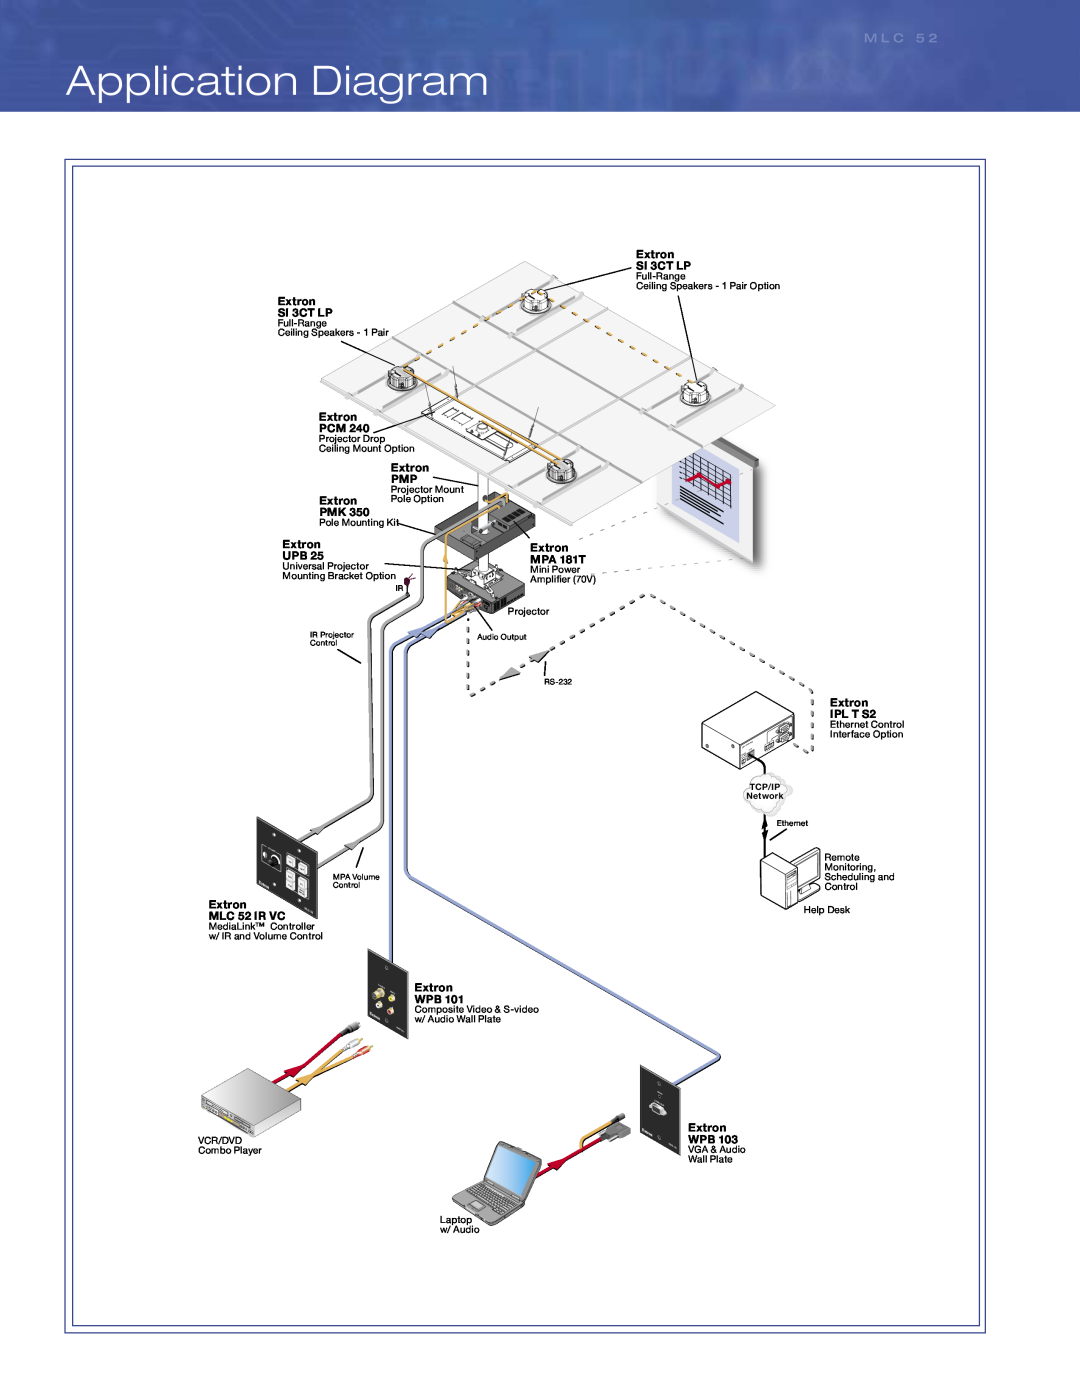 Extron electronic MLC 52 IR, MLC 52 RS manual Application Diagram, M L C 5, Tcp/Ip, Network 